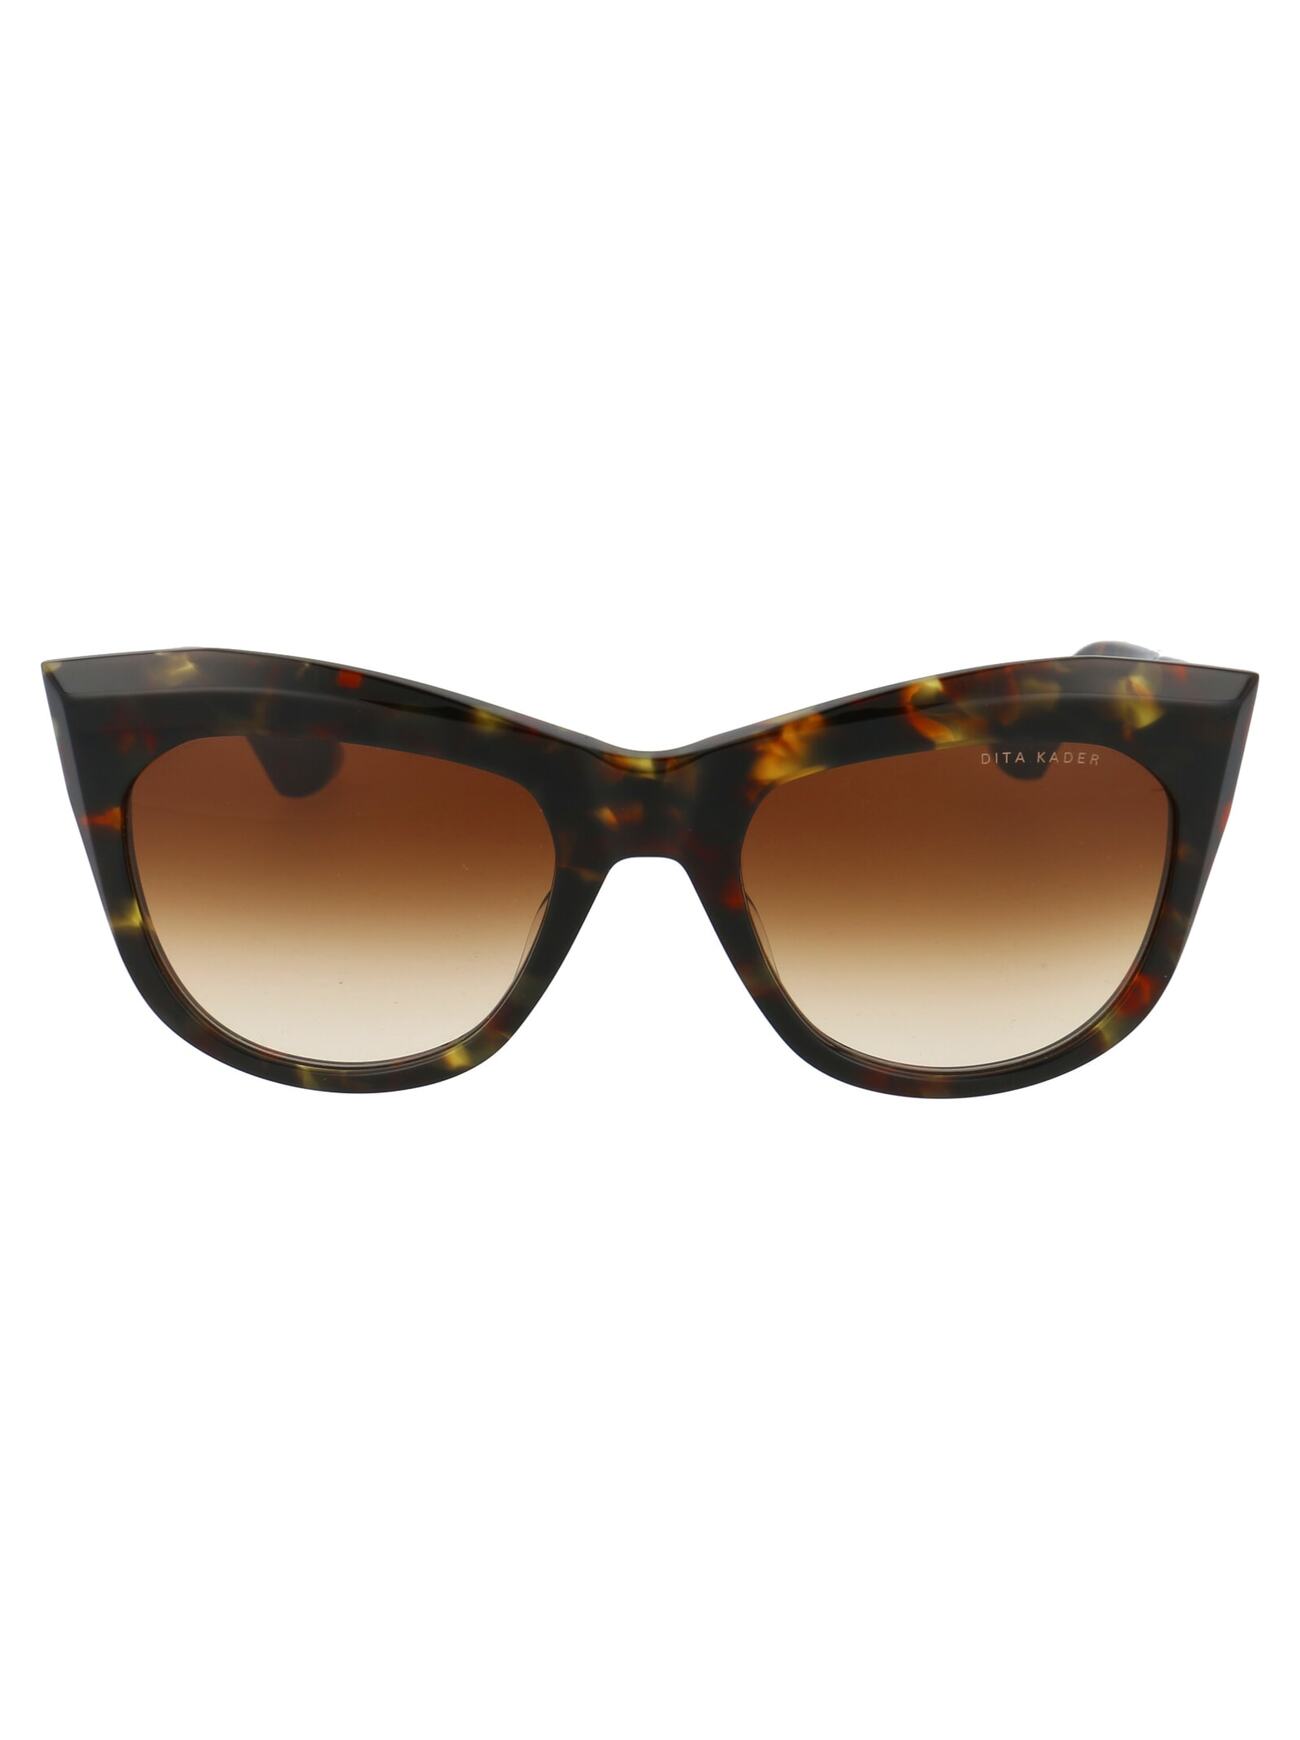 Dita Kader Sunglasses in brown / clear